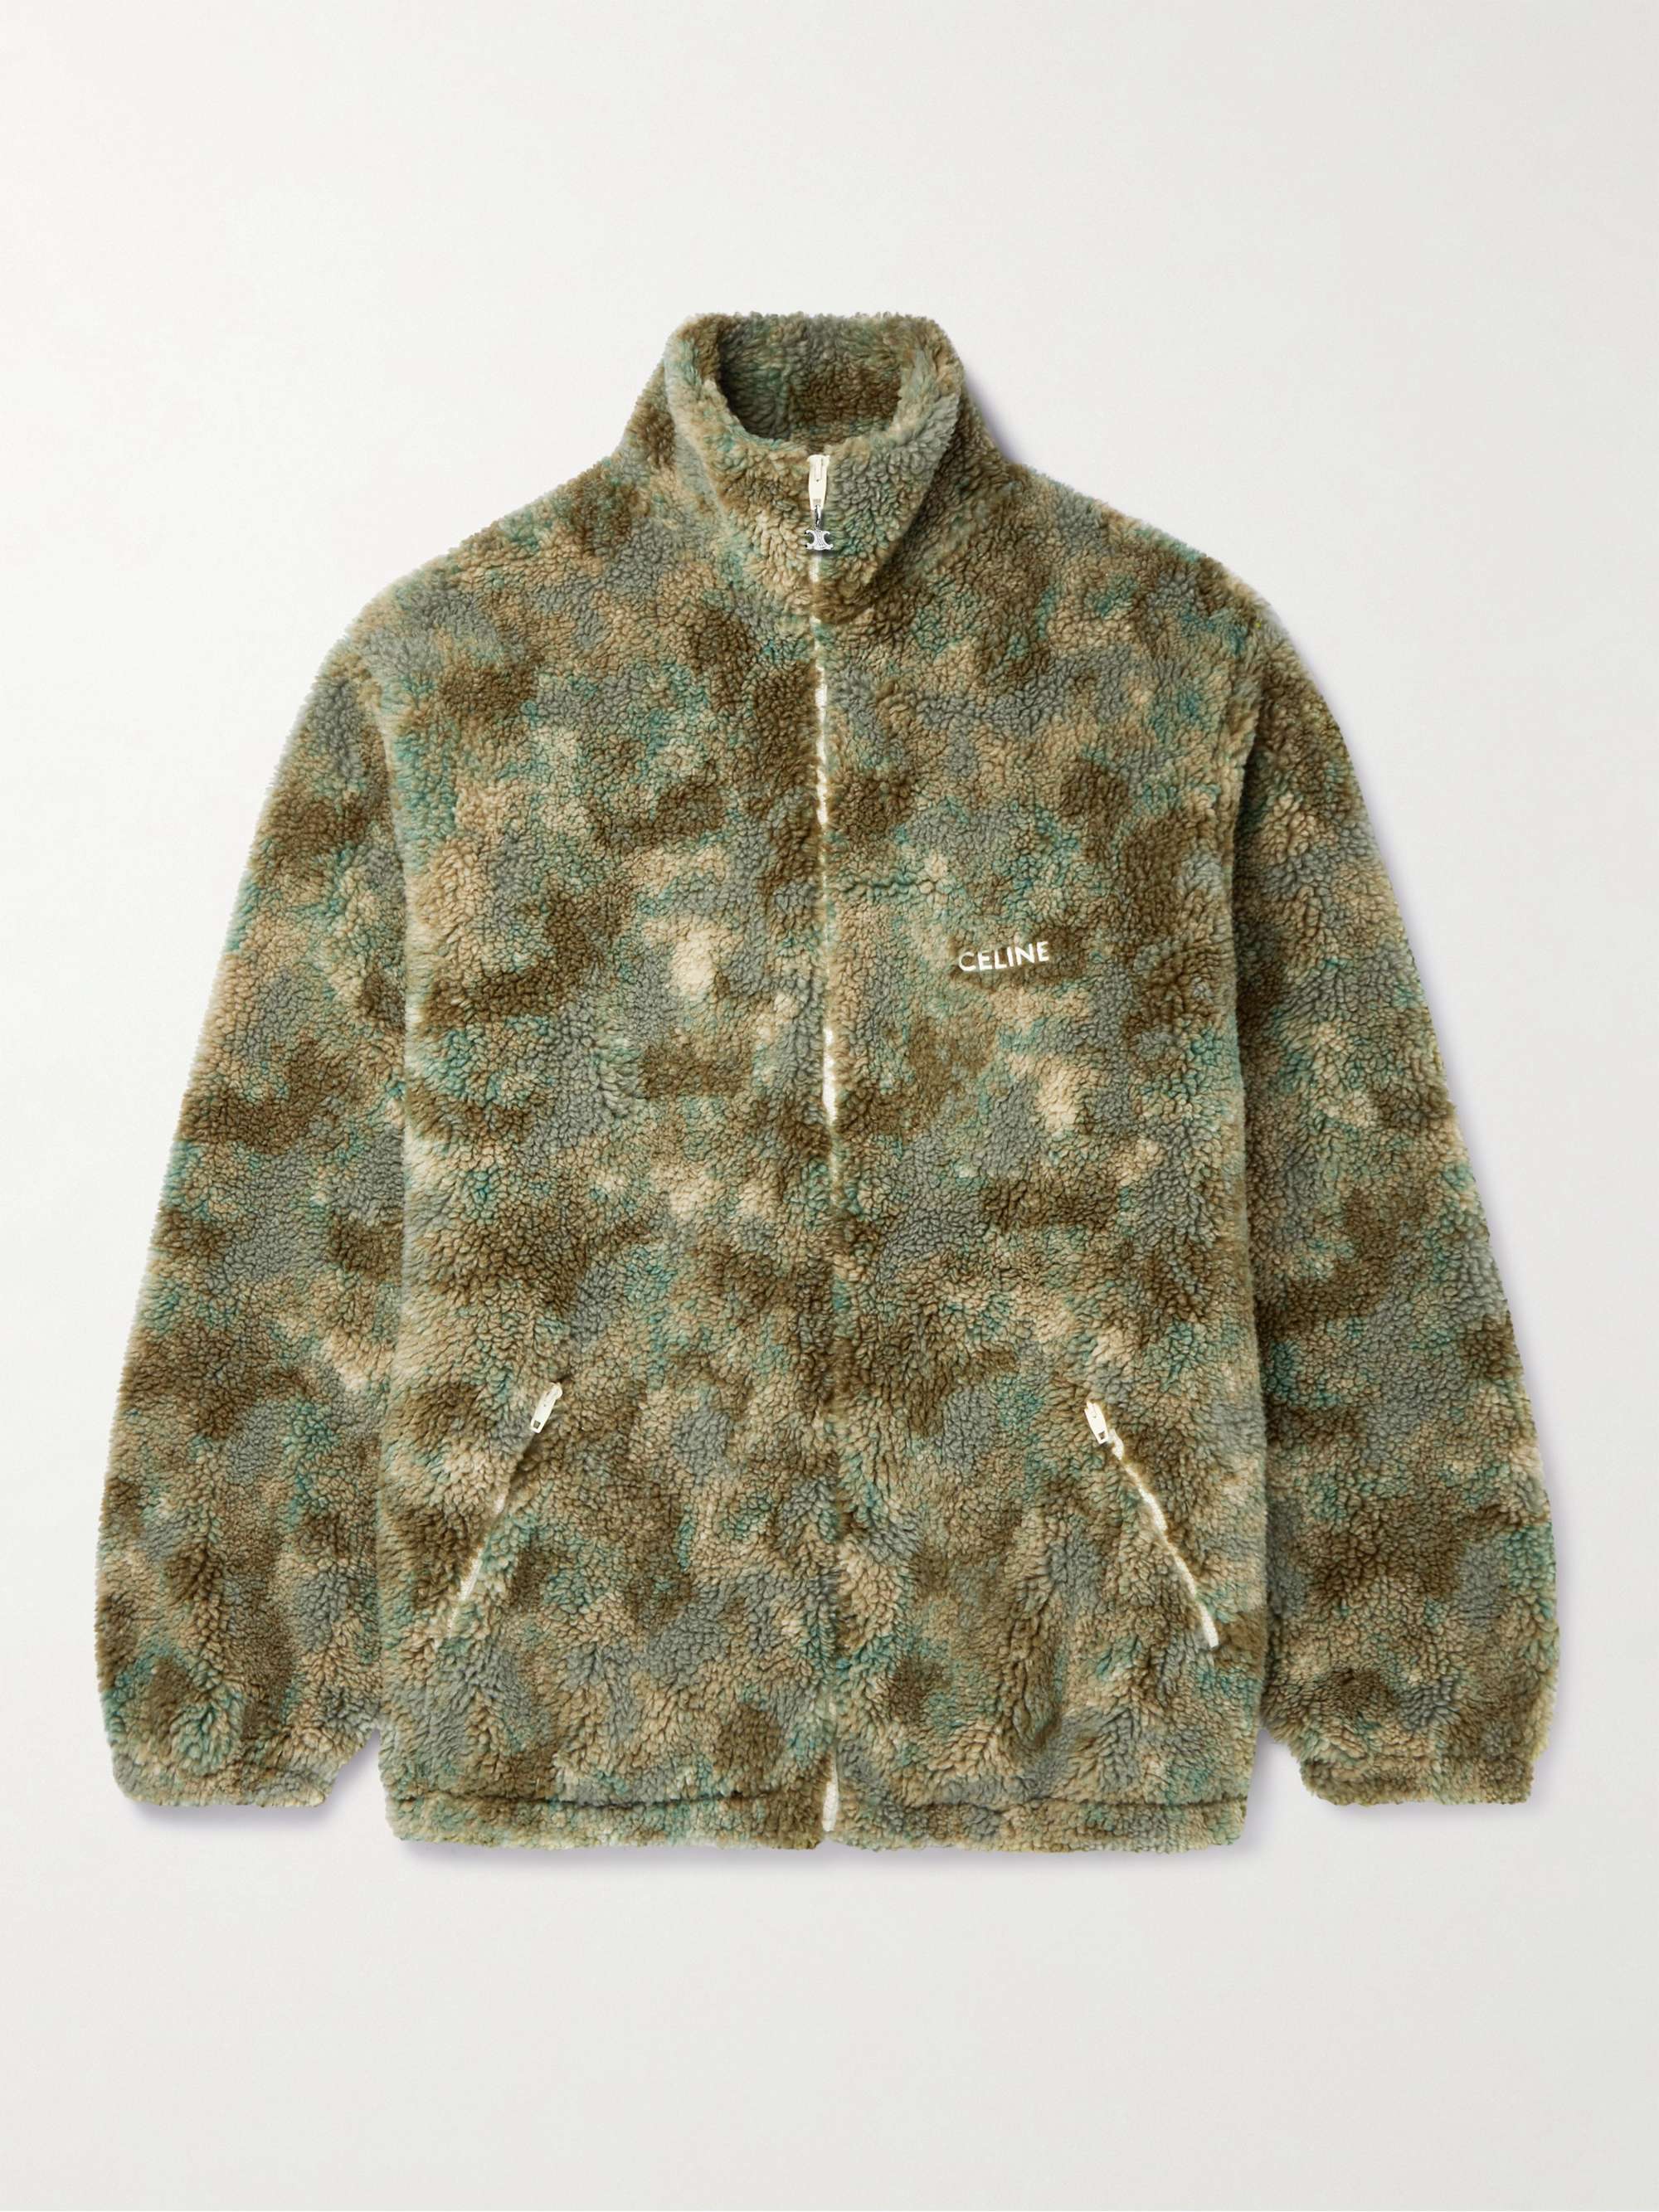 CELINE HOMME Oversized Camouflage-Print Fleece Jacket | MR PORTER